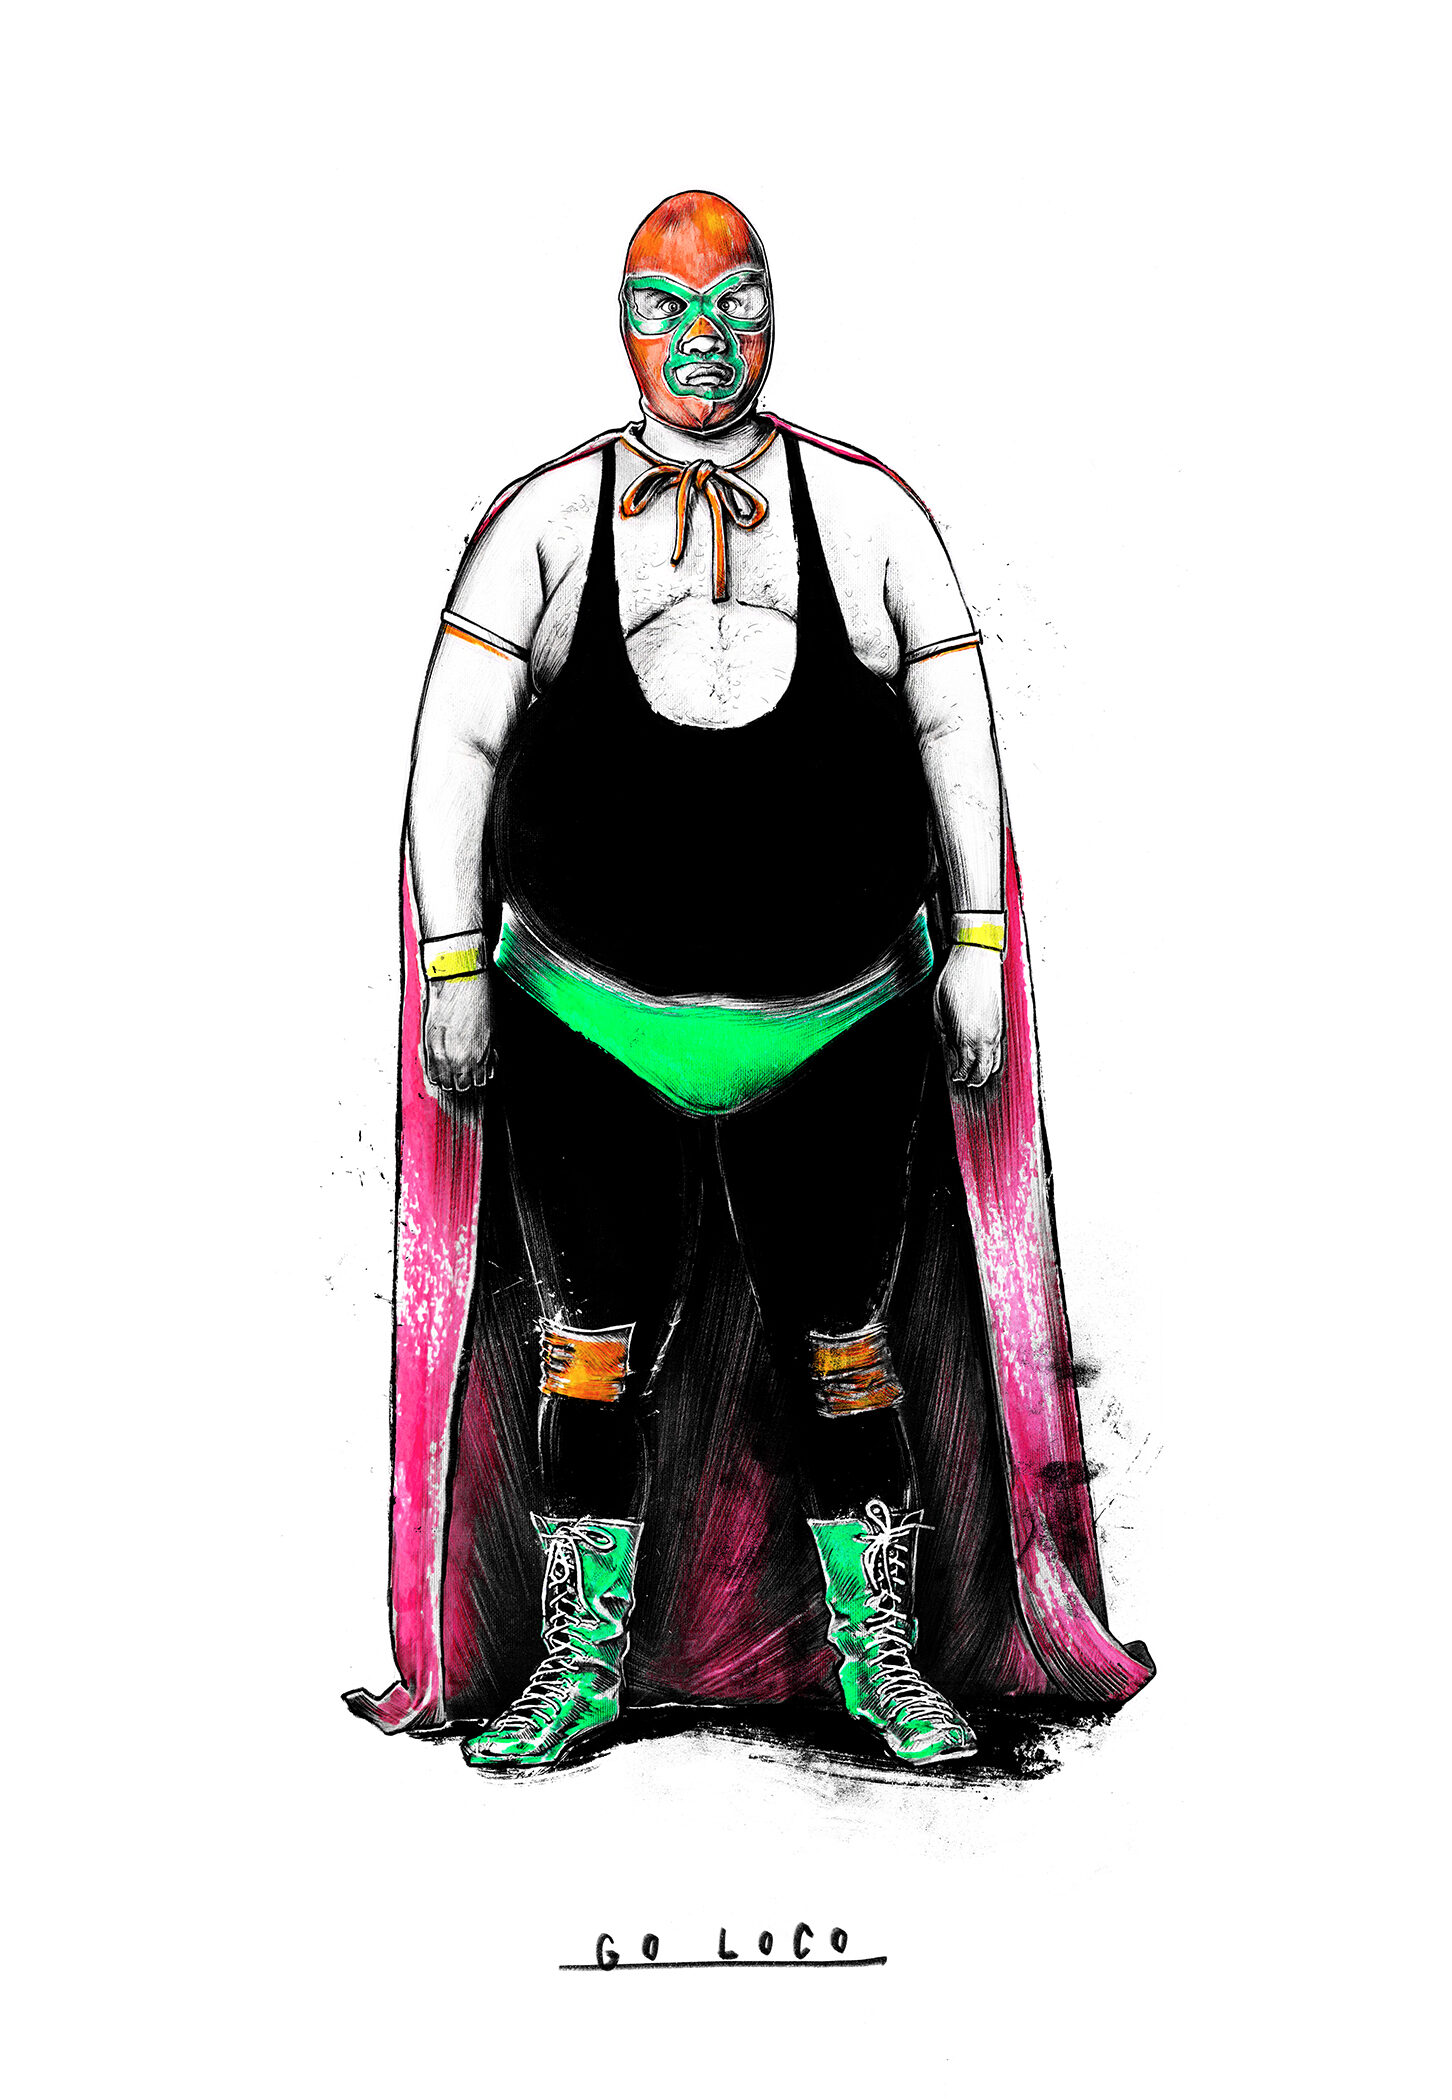 Wrestler wrestling wwe lucha libre go loco lokko neon Artwork drawing art illustration kornel ink gallery zeichnung kunst - Kornel Illustration | Kornel Stadler portfolio